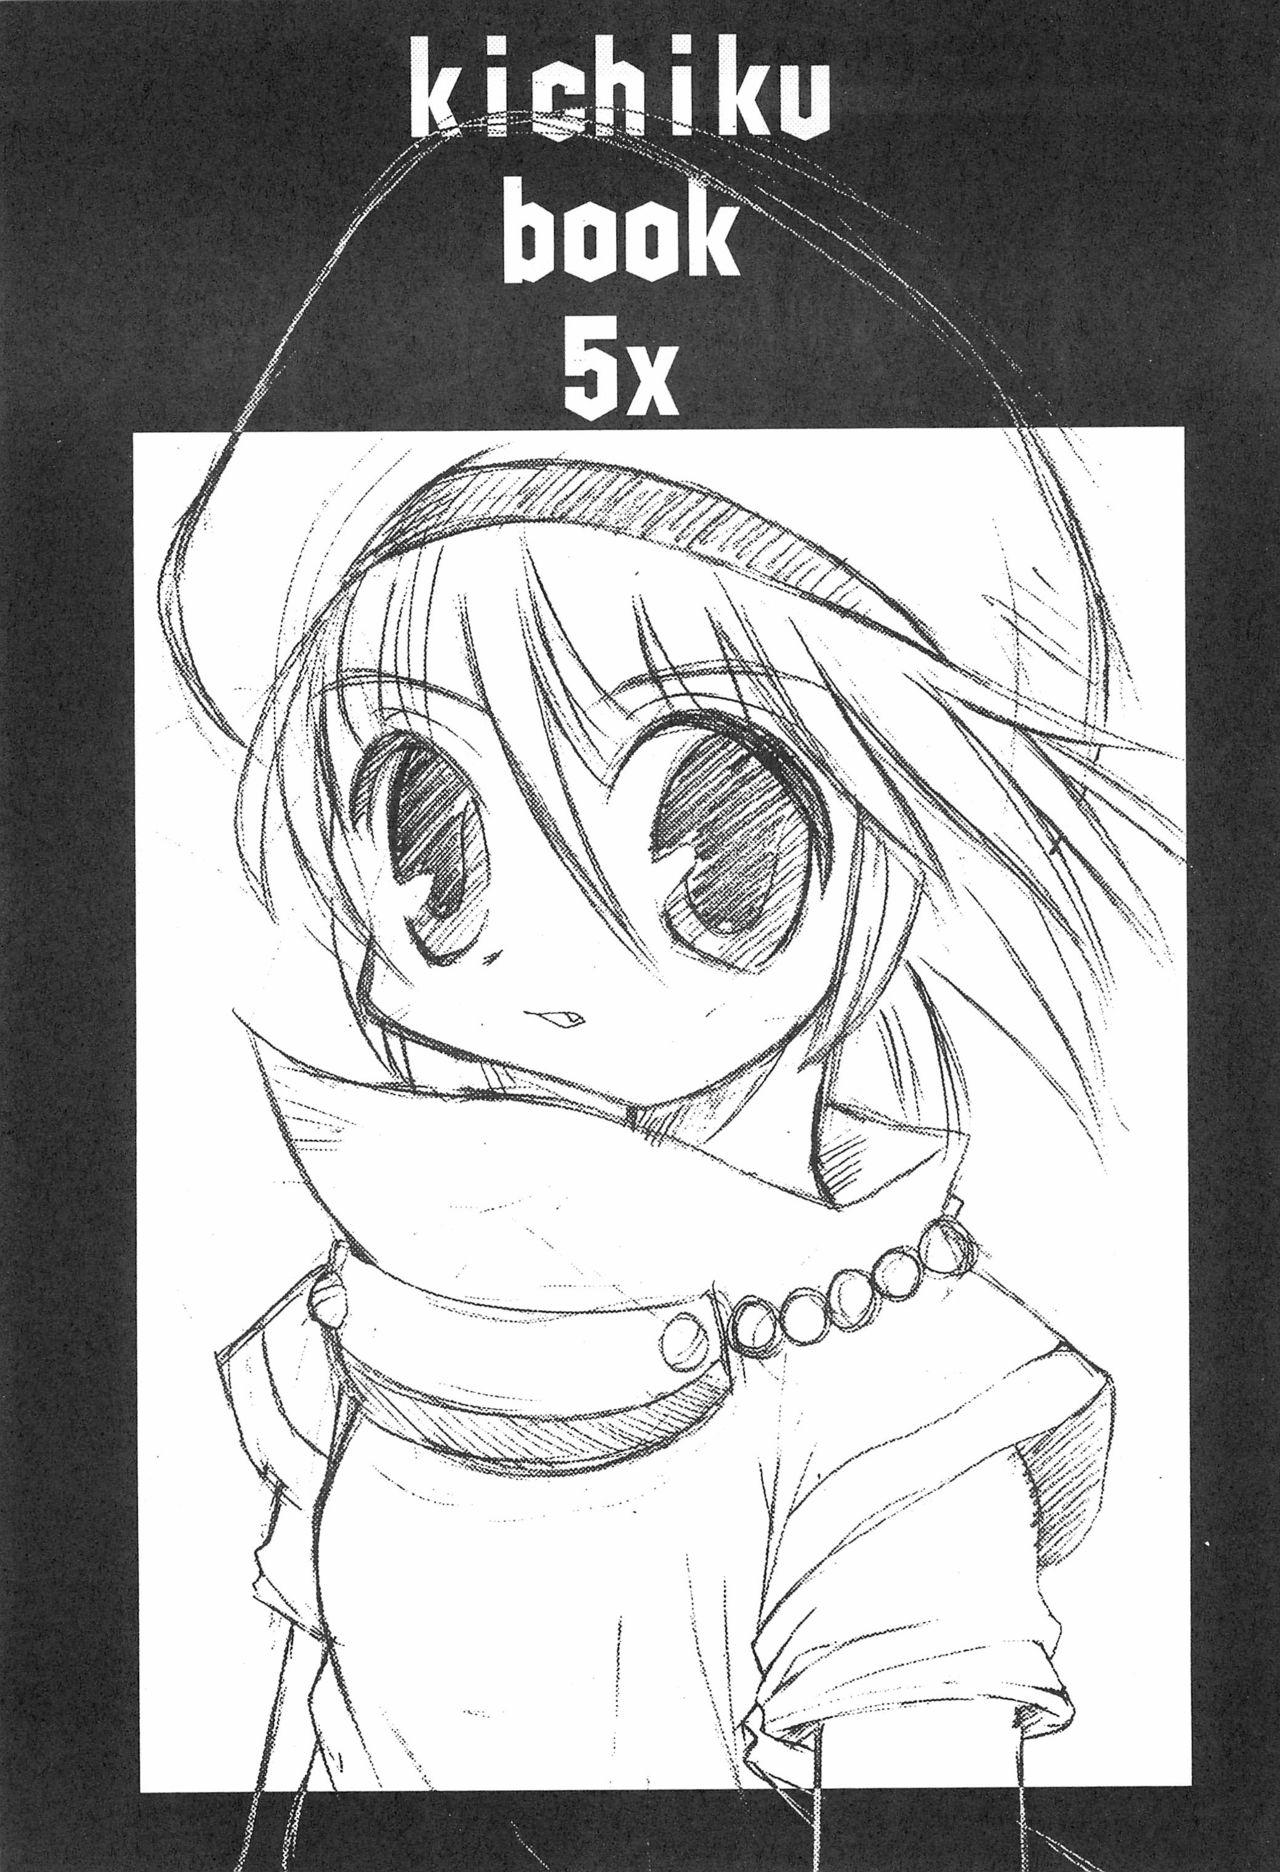 KICHIKU BOOK 5X 2